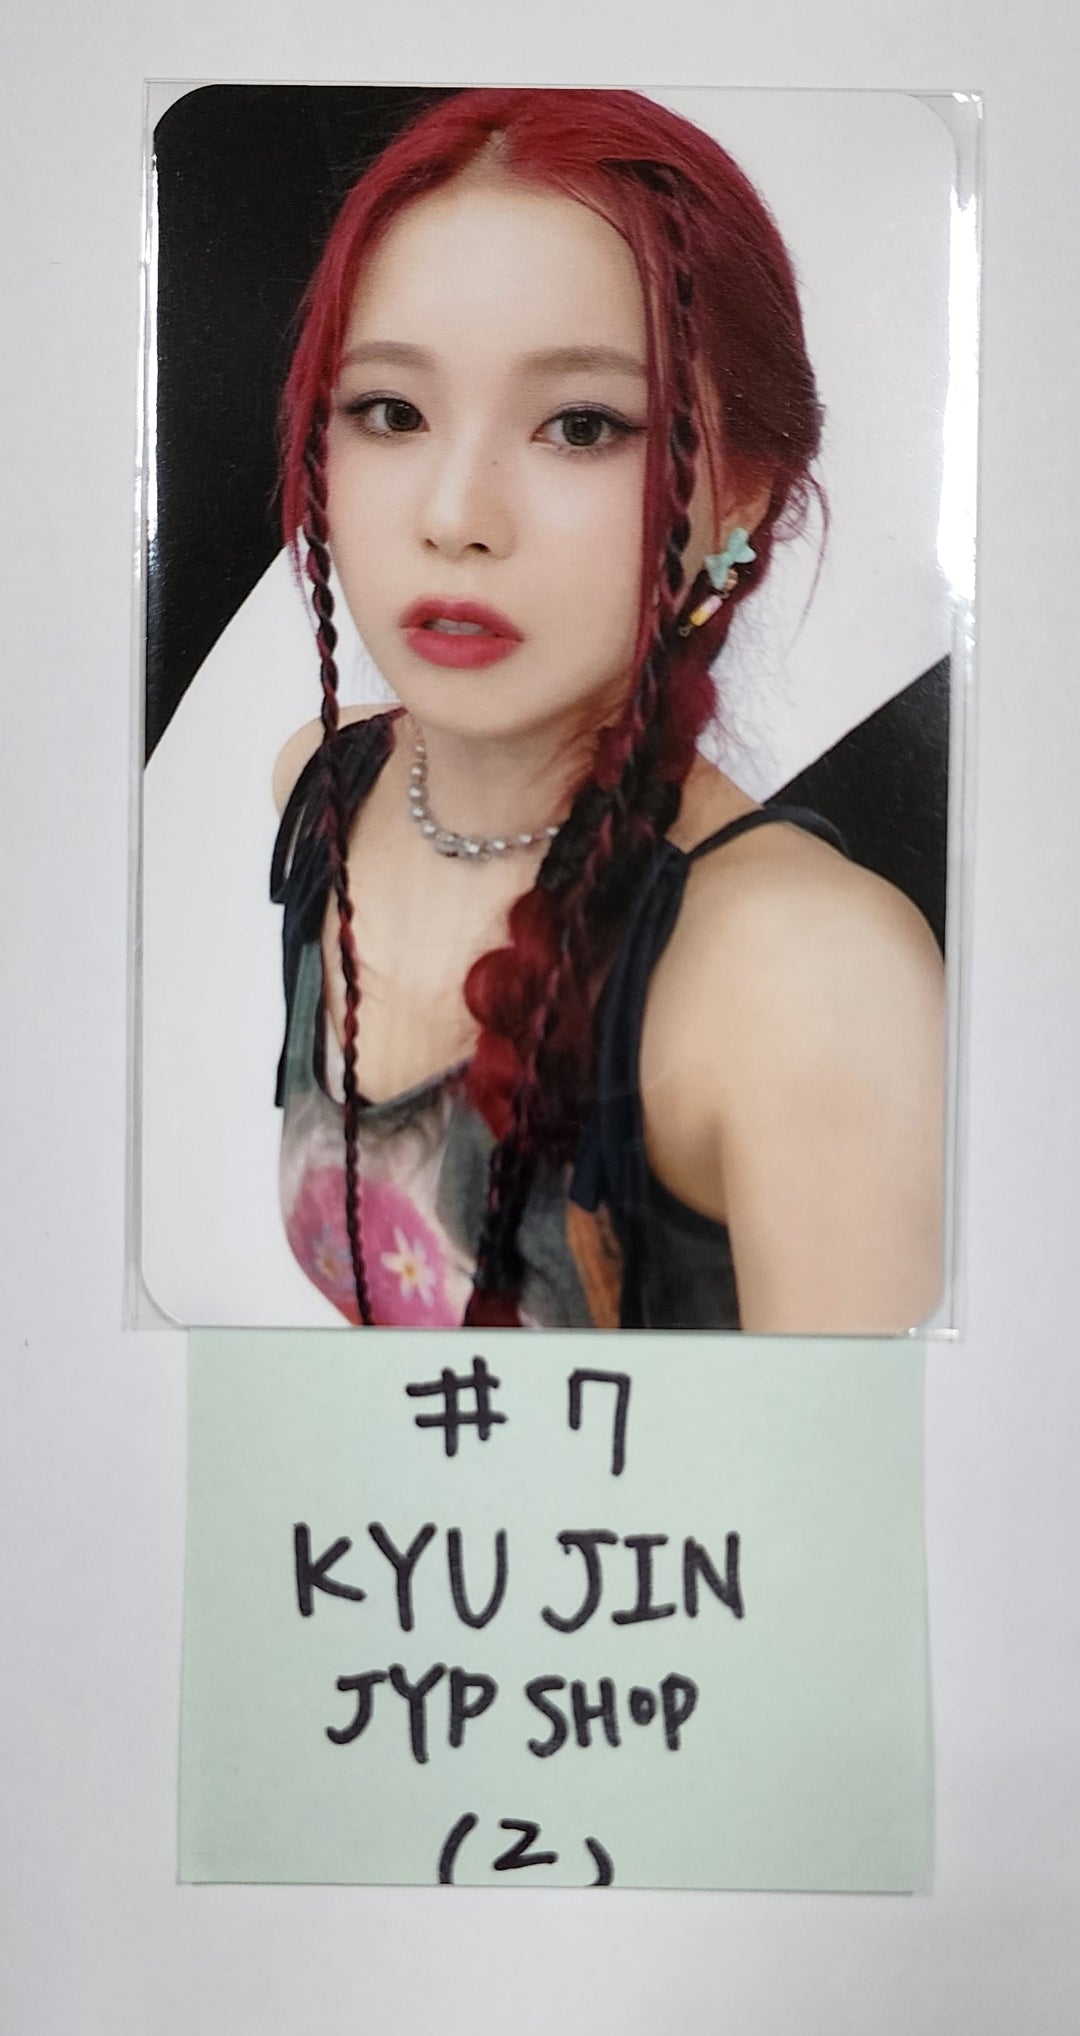 NMIXX 'ENTWURF' - JYP Shop 예약판매 혜택 포토카드 [9/23 재입고]